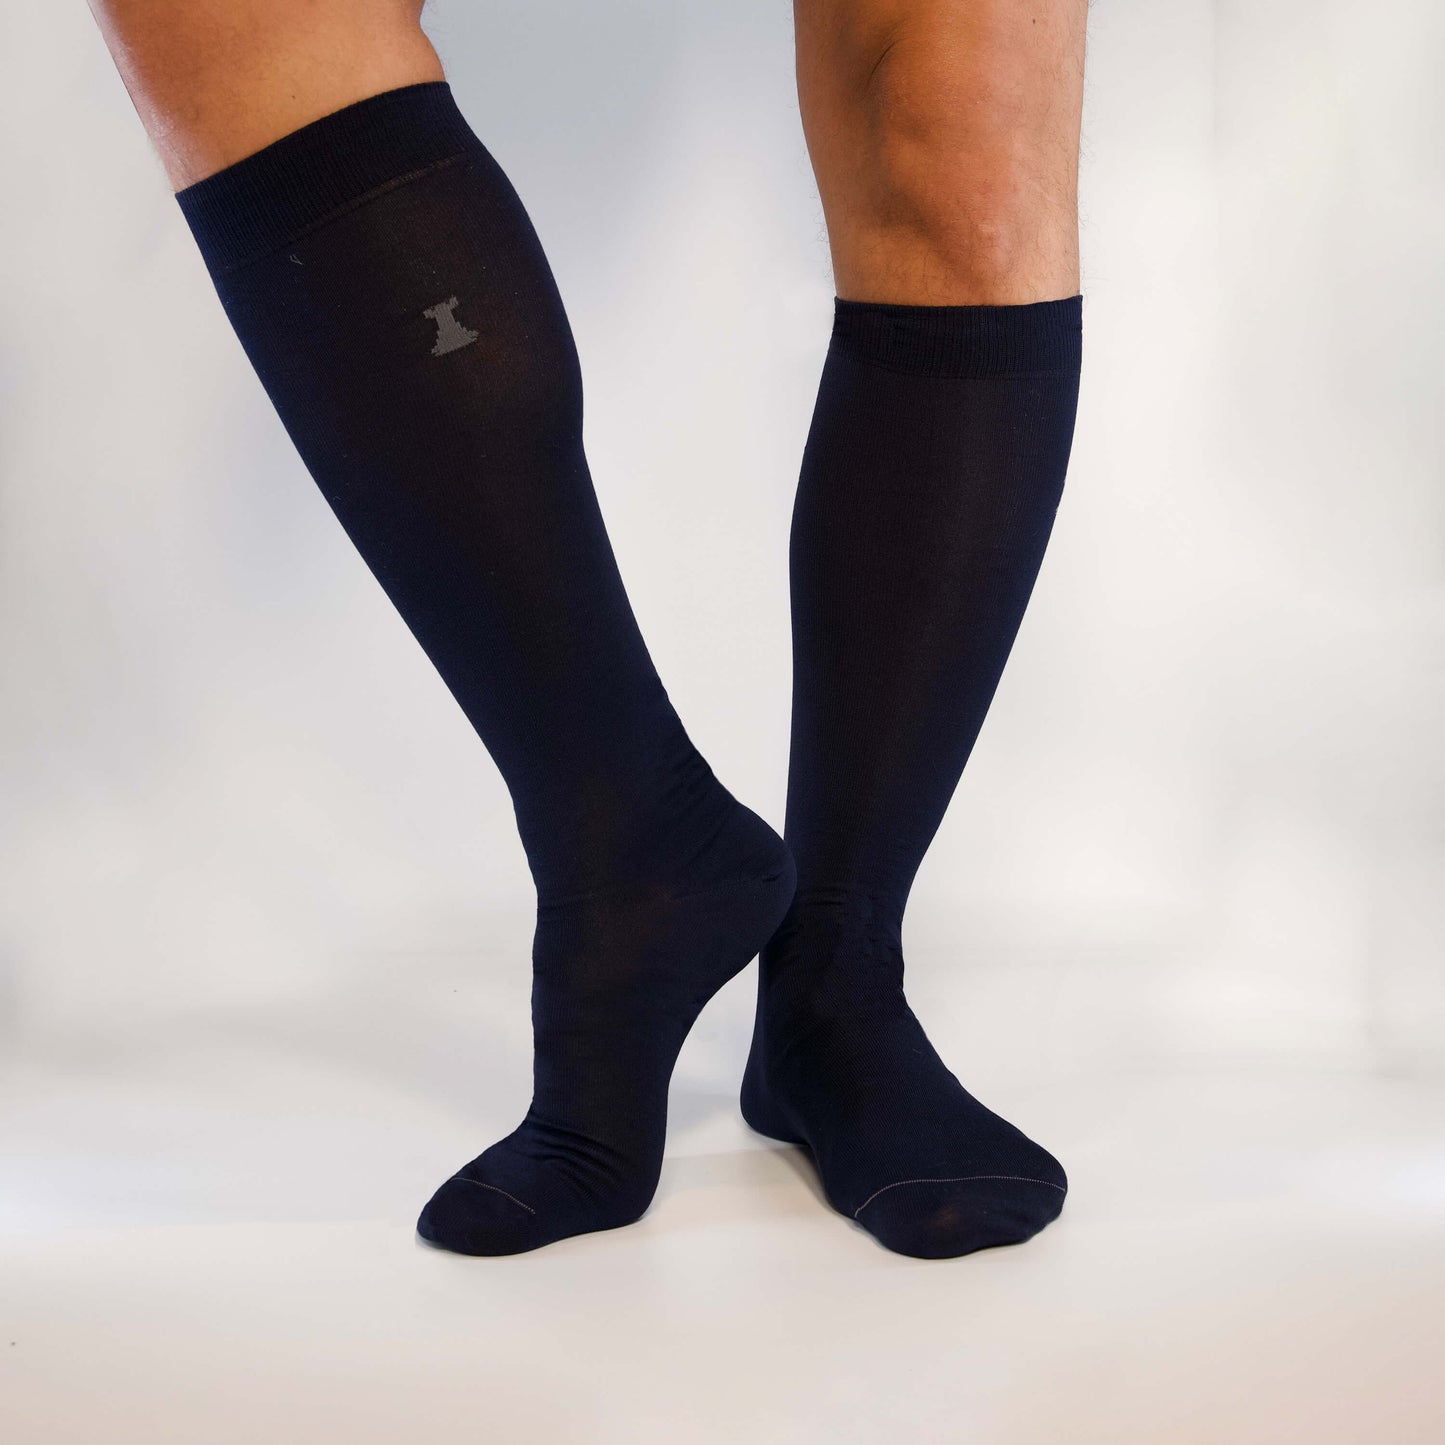 Basic mix Box of 6 knee high socks - 3 x Solid Black / 3 x Solid Blue